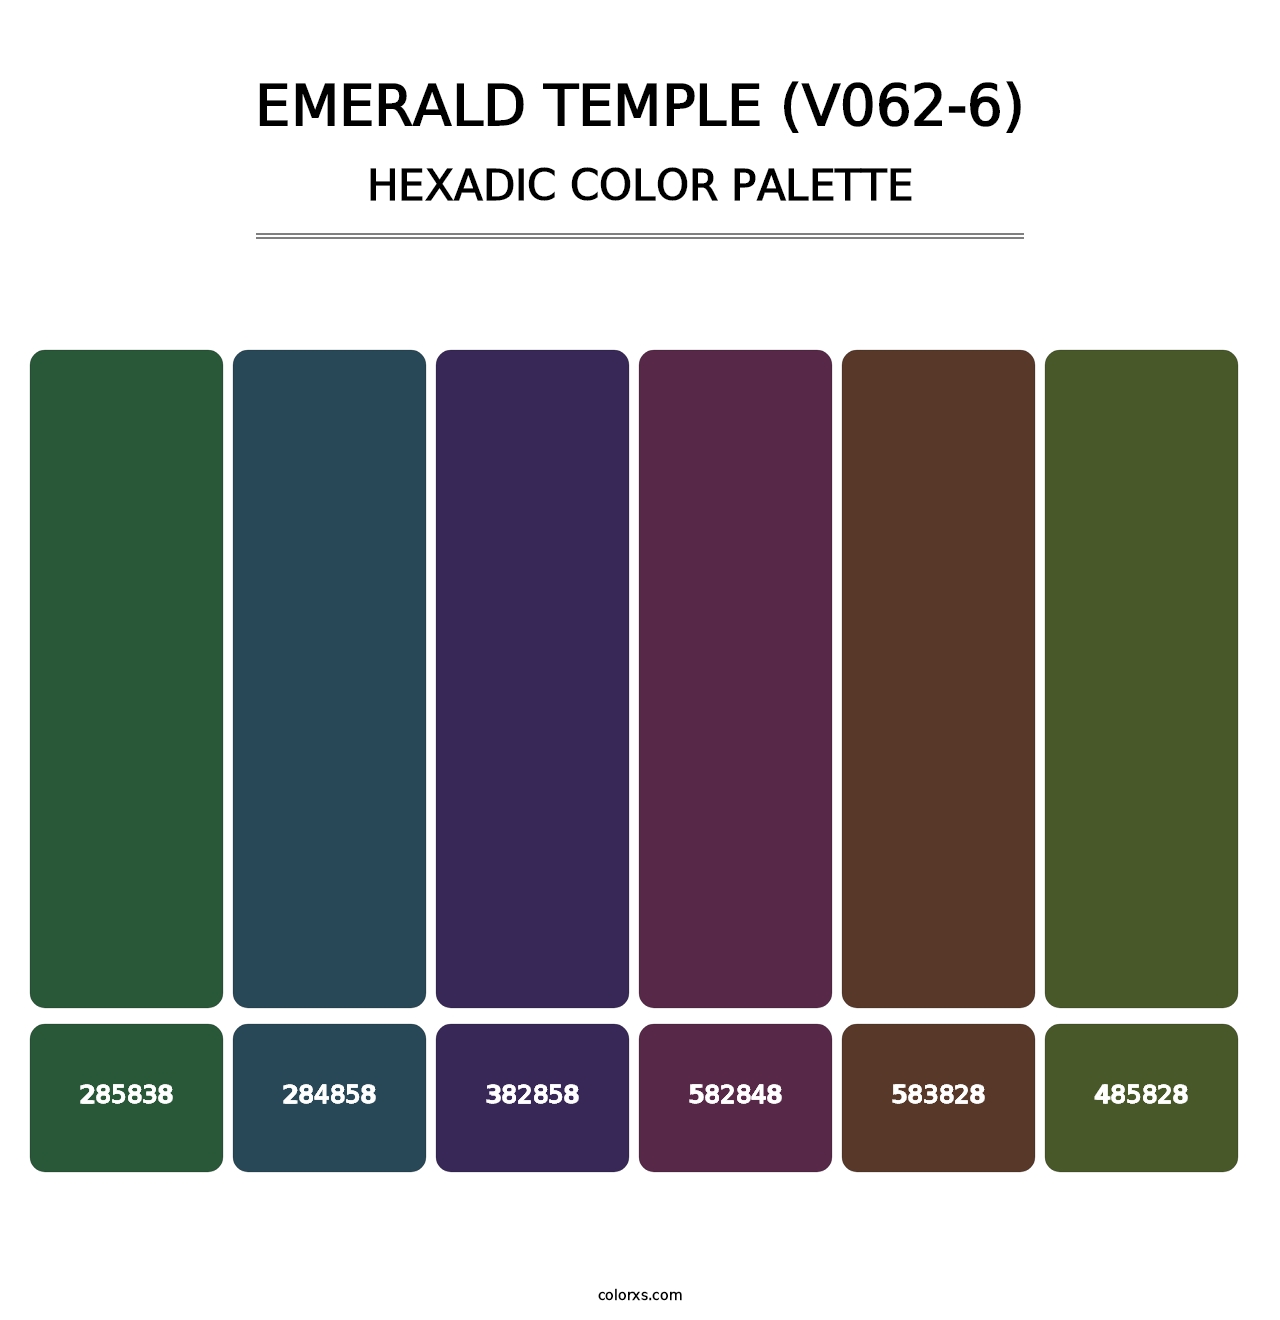 Emerald Temple (V062-6) - Hexadic Color Palette